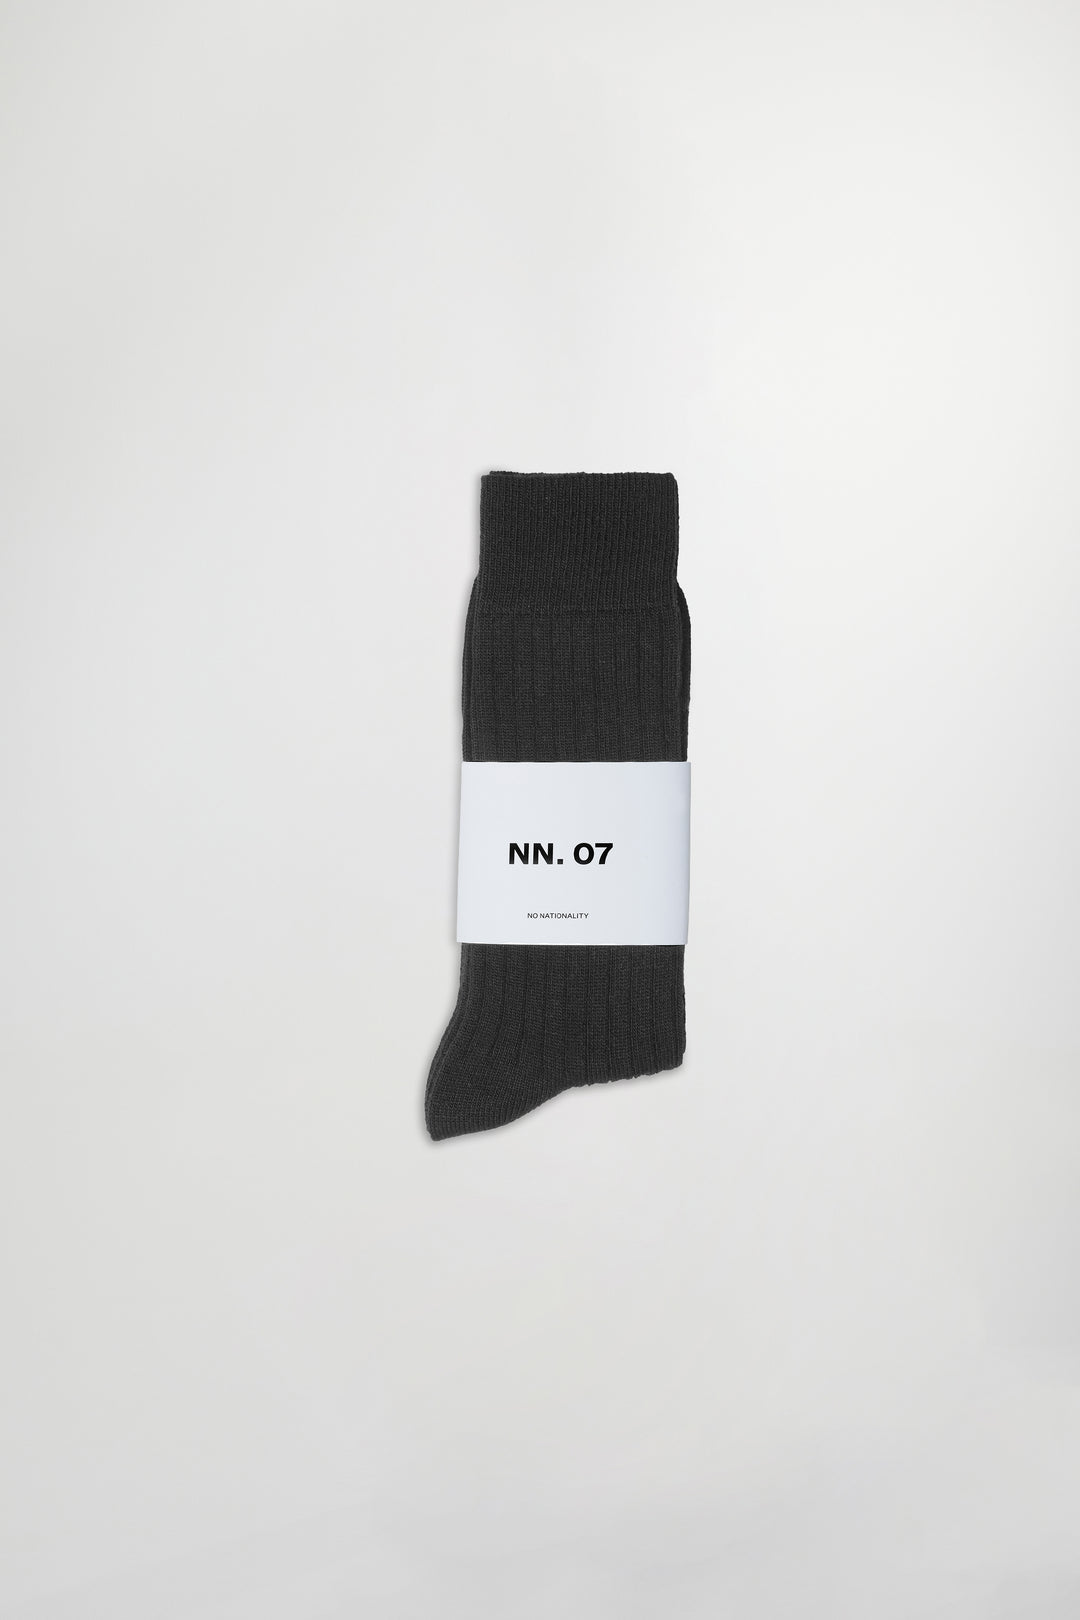 NN07 - Sock Ten 9140 in Black  | Buster